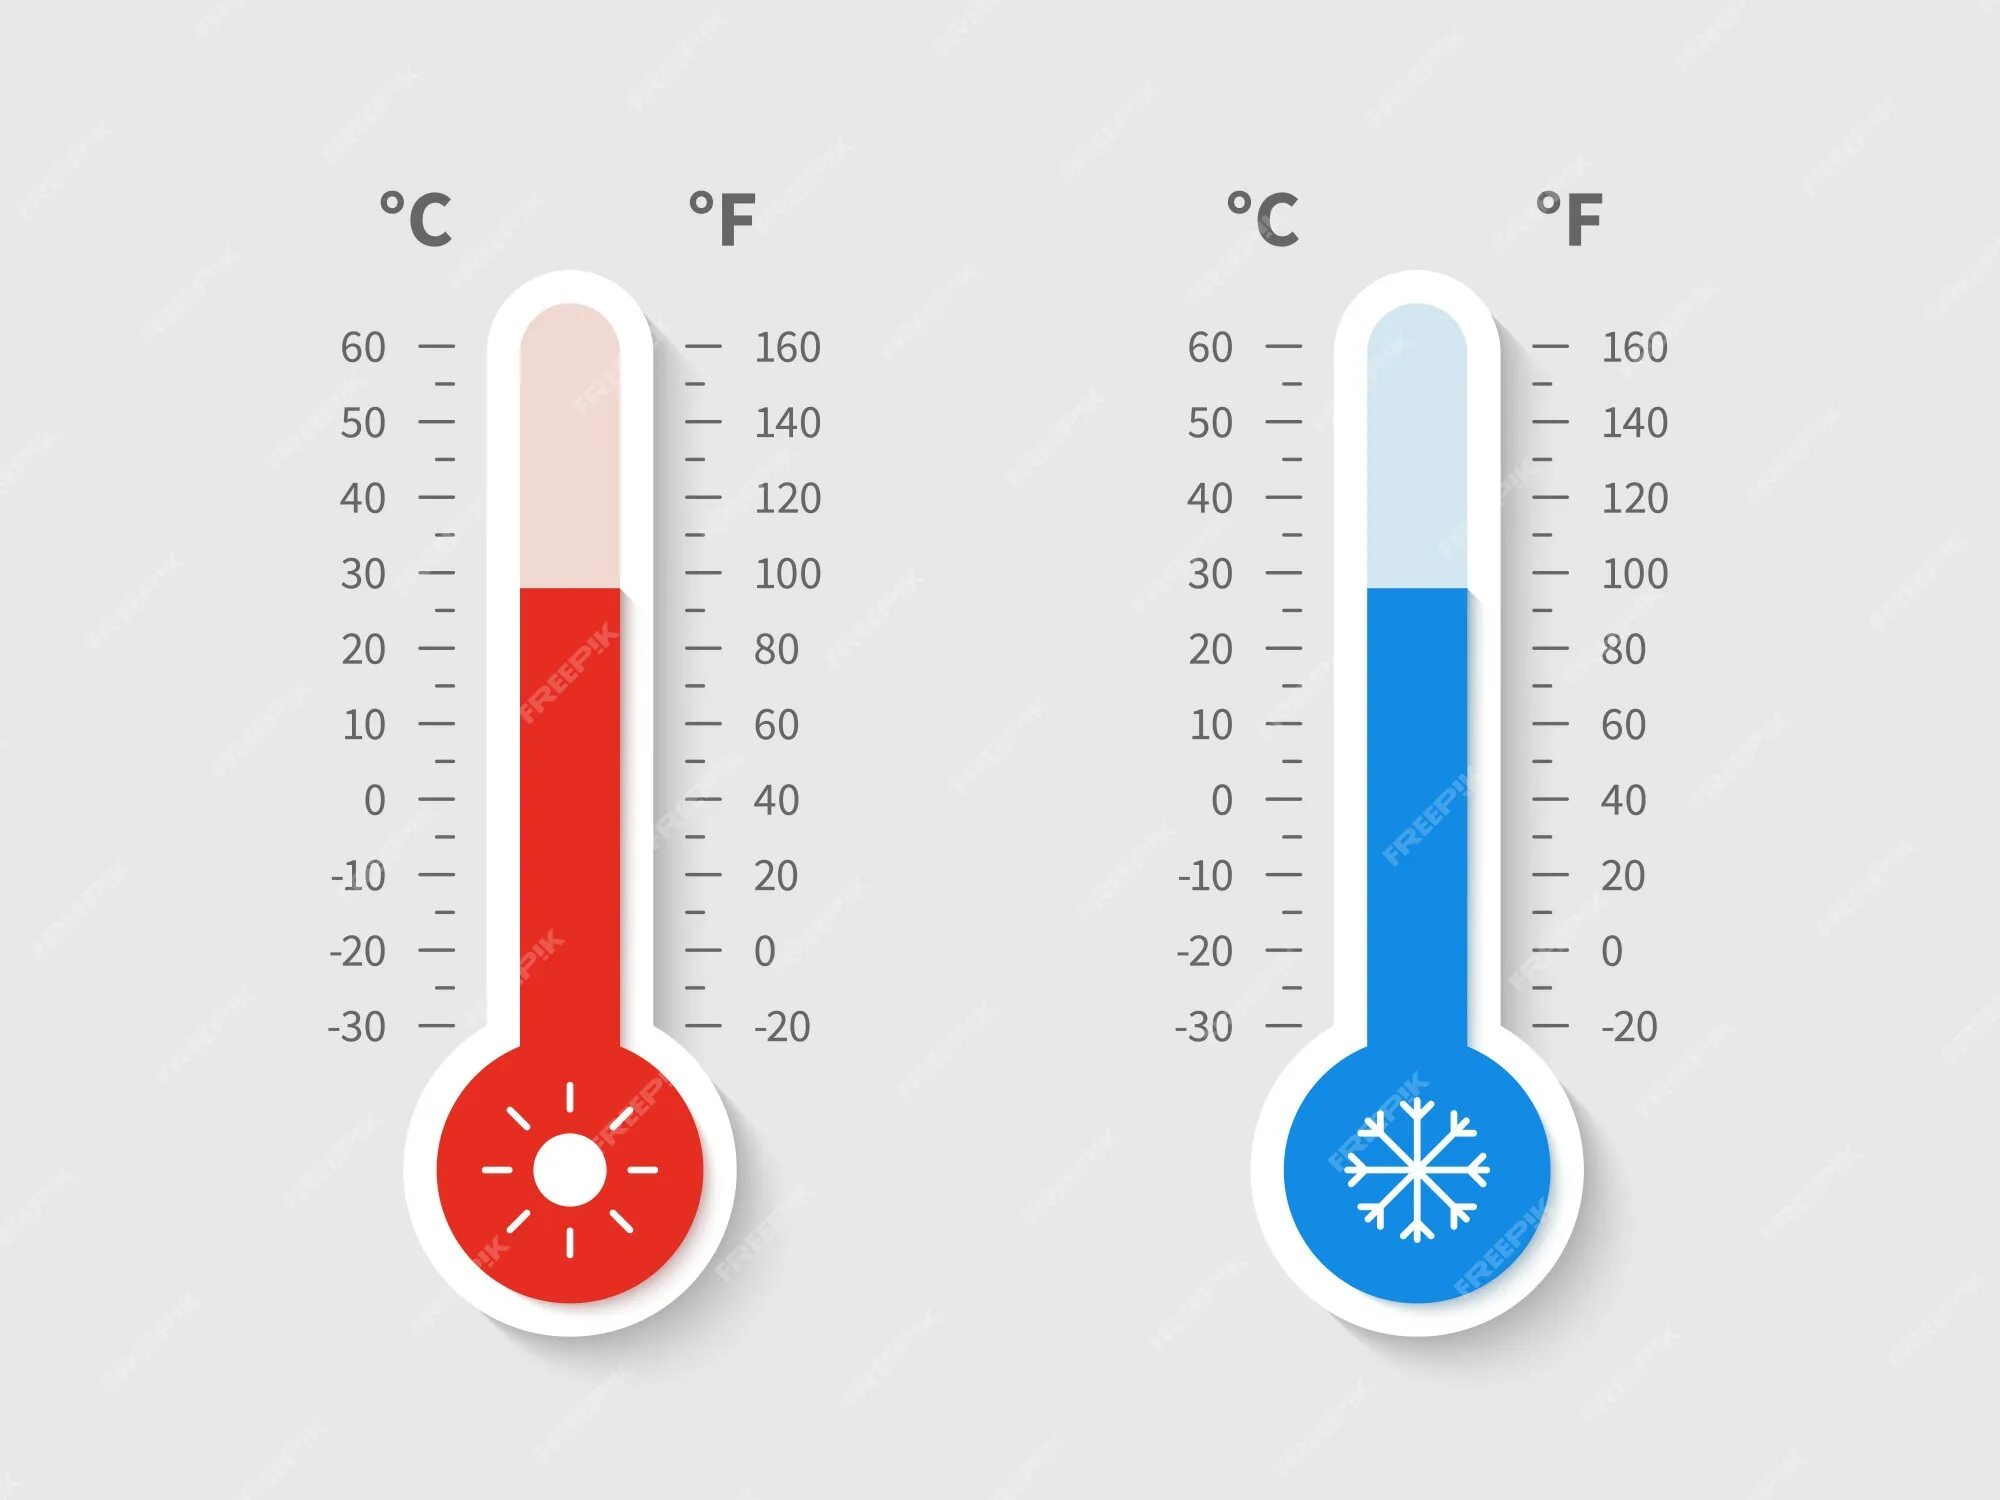 Температуре от 60 0 с. Термометр Цельсия. Термометр Цельсия и Фаренгейта. Термометр по Цельсию. Термометр со шкалой Цельсия.